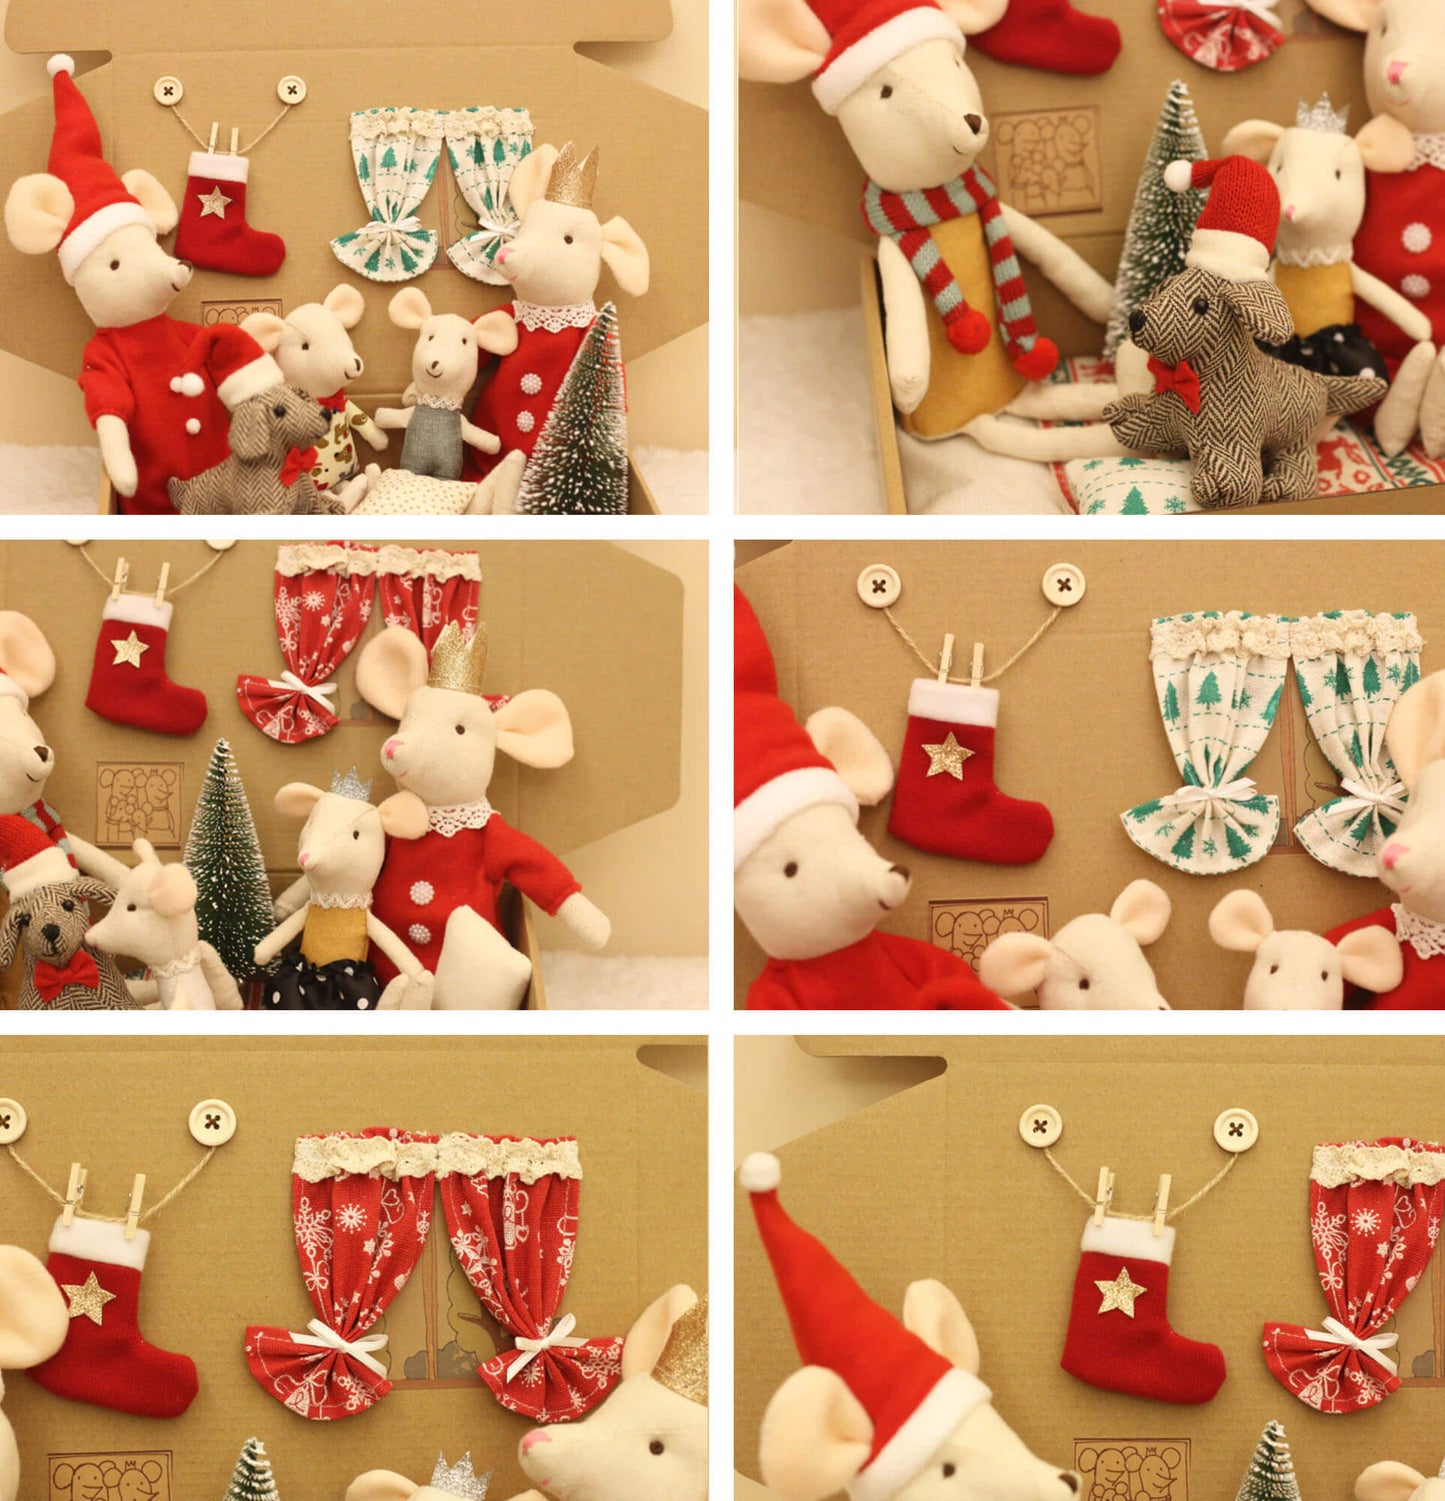 Christmas mouse family & dolls house kids gift